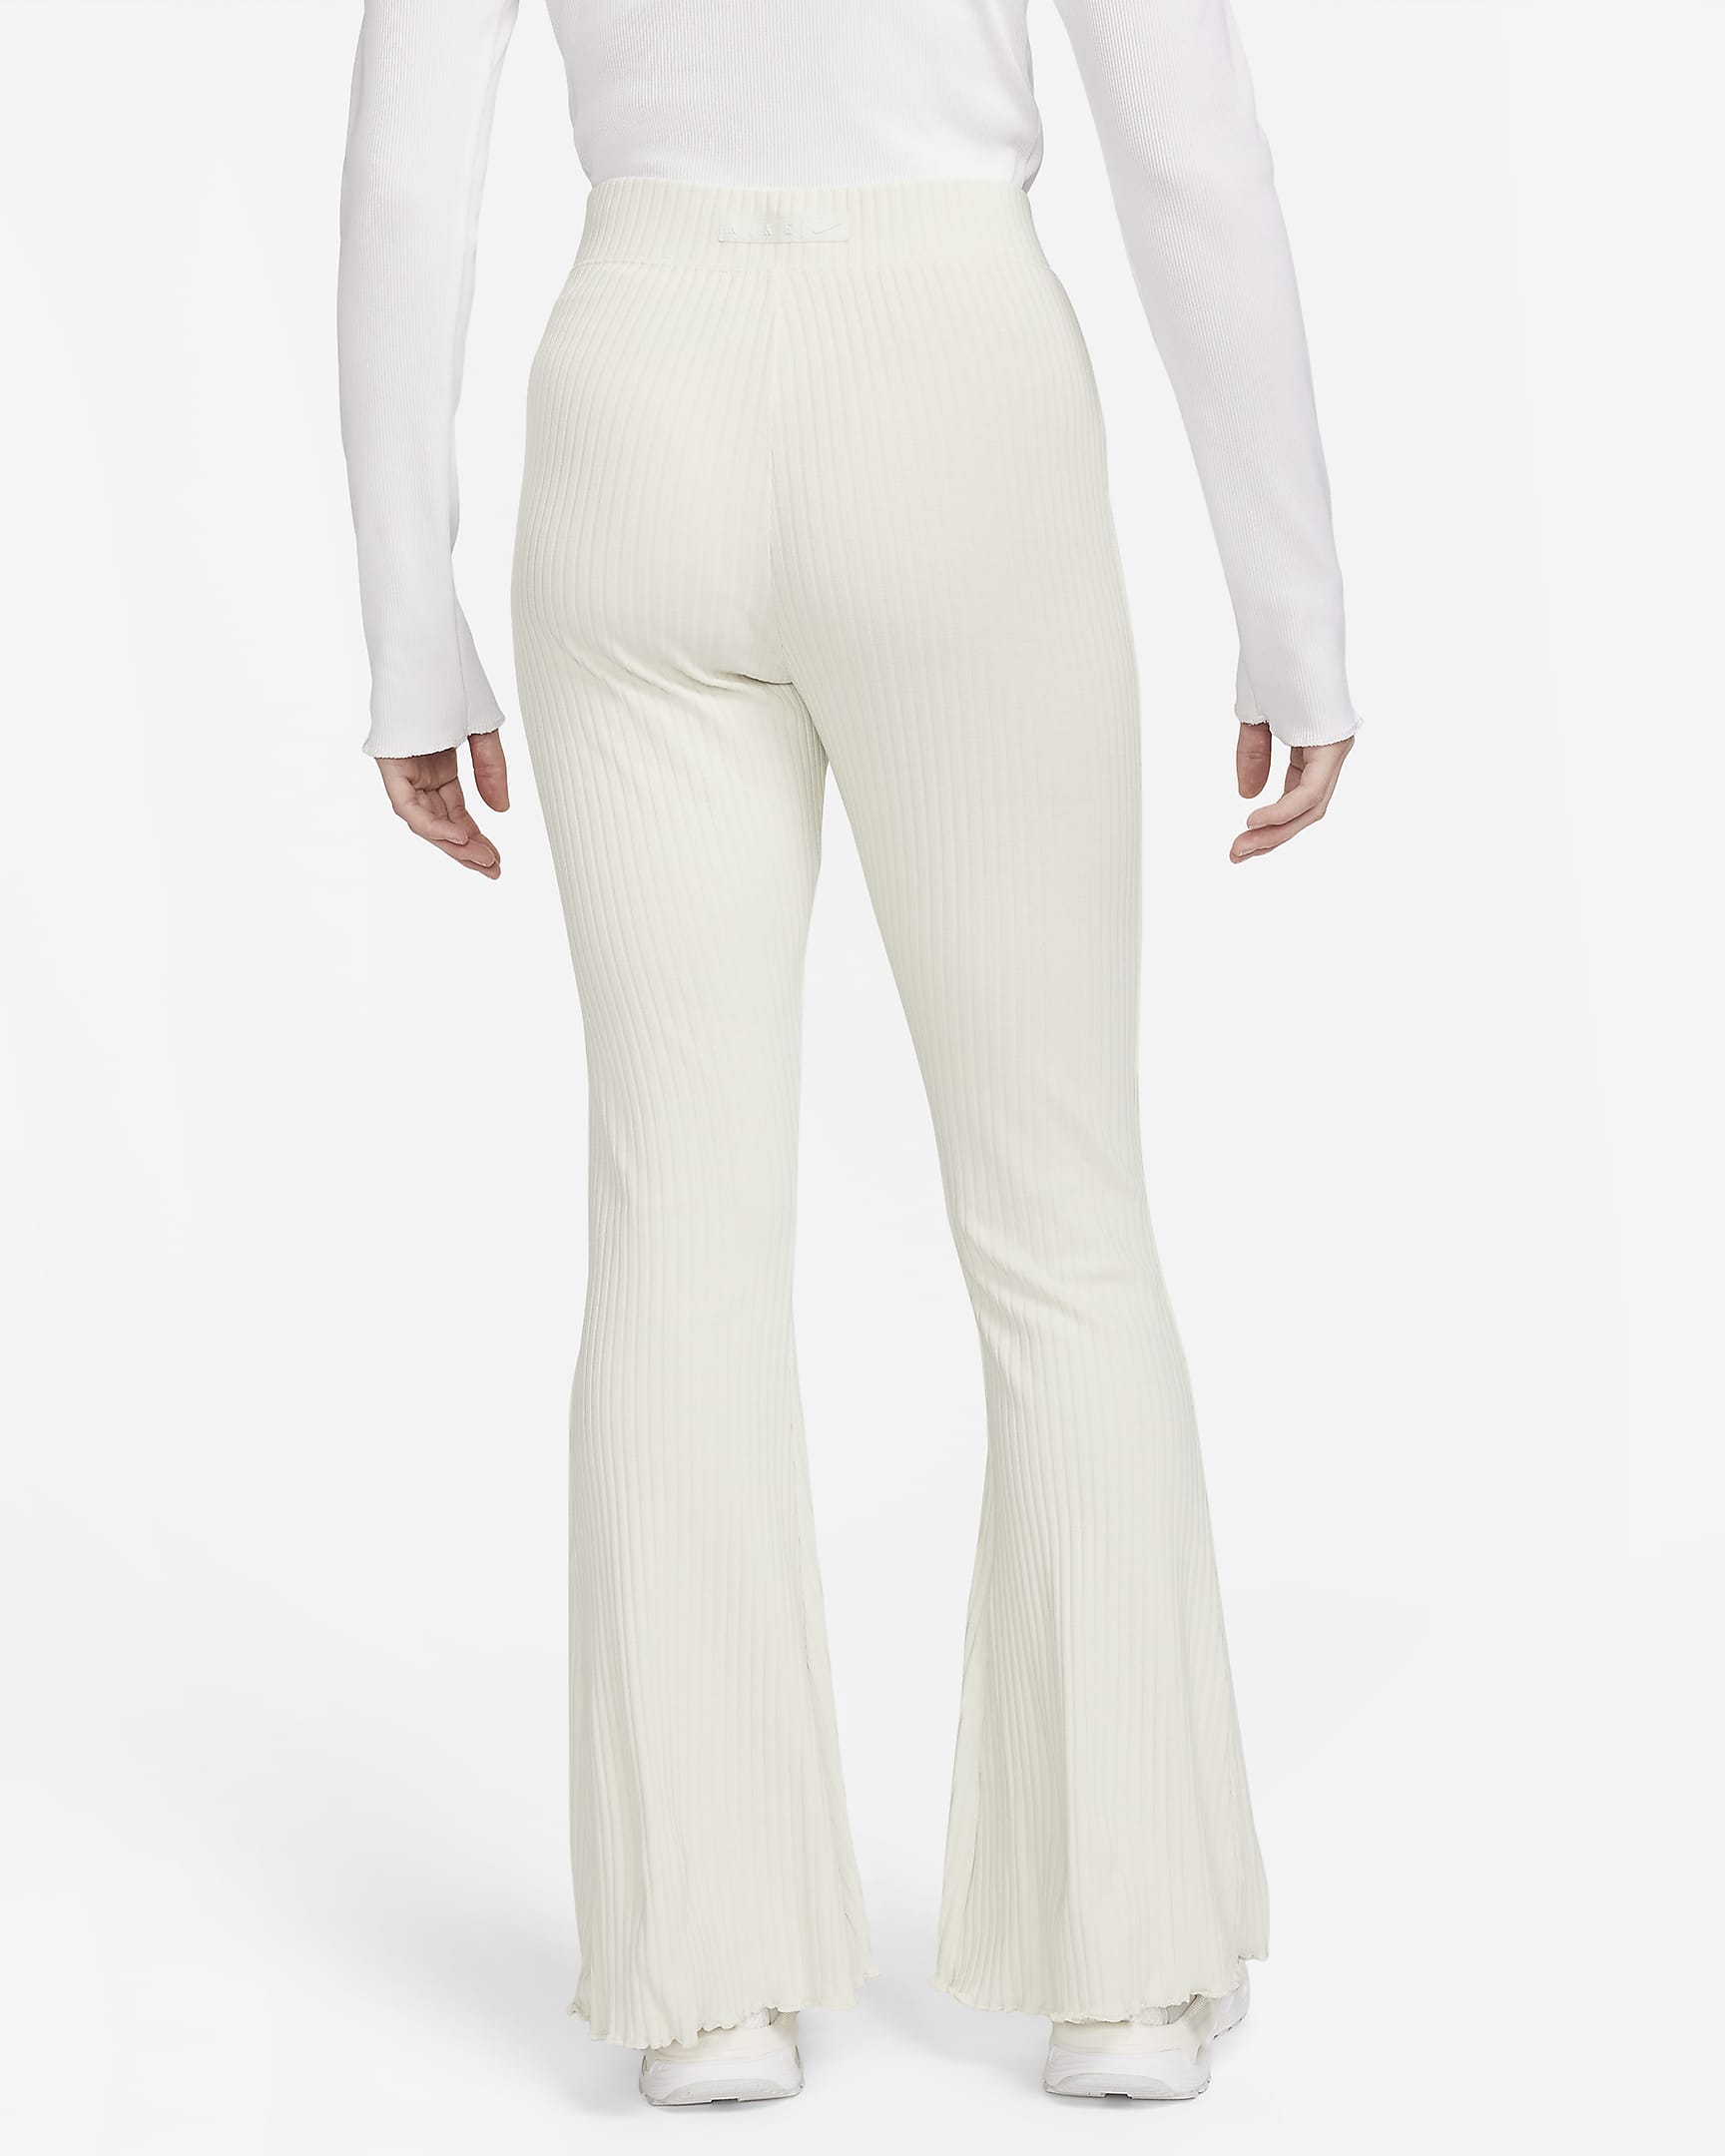 Nike Sportswear SE Women's High-Waisted Full-Length Ribbed Jersey Pants ...